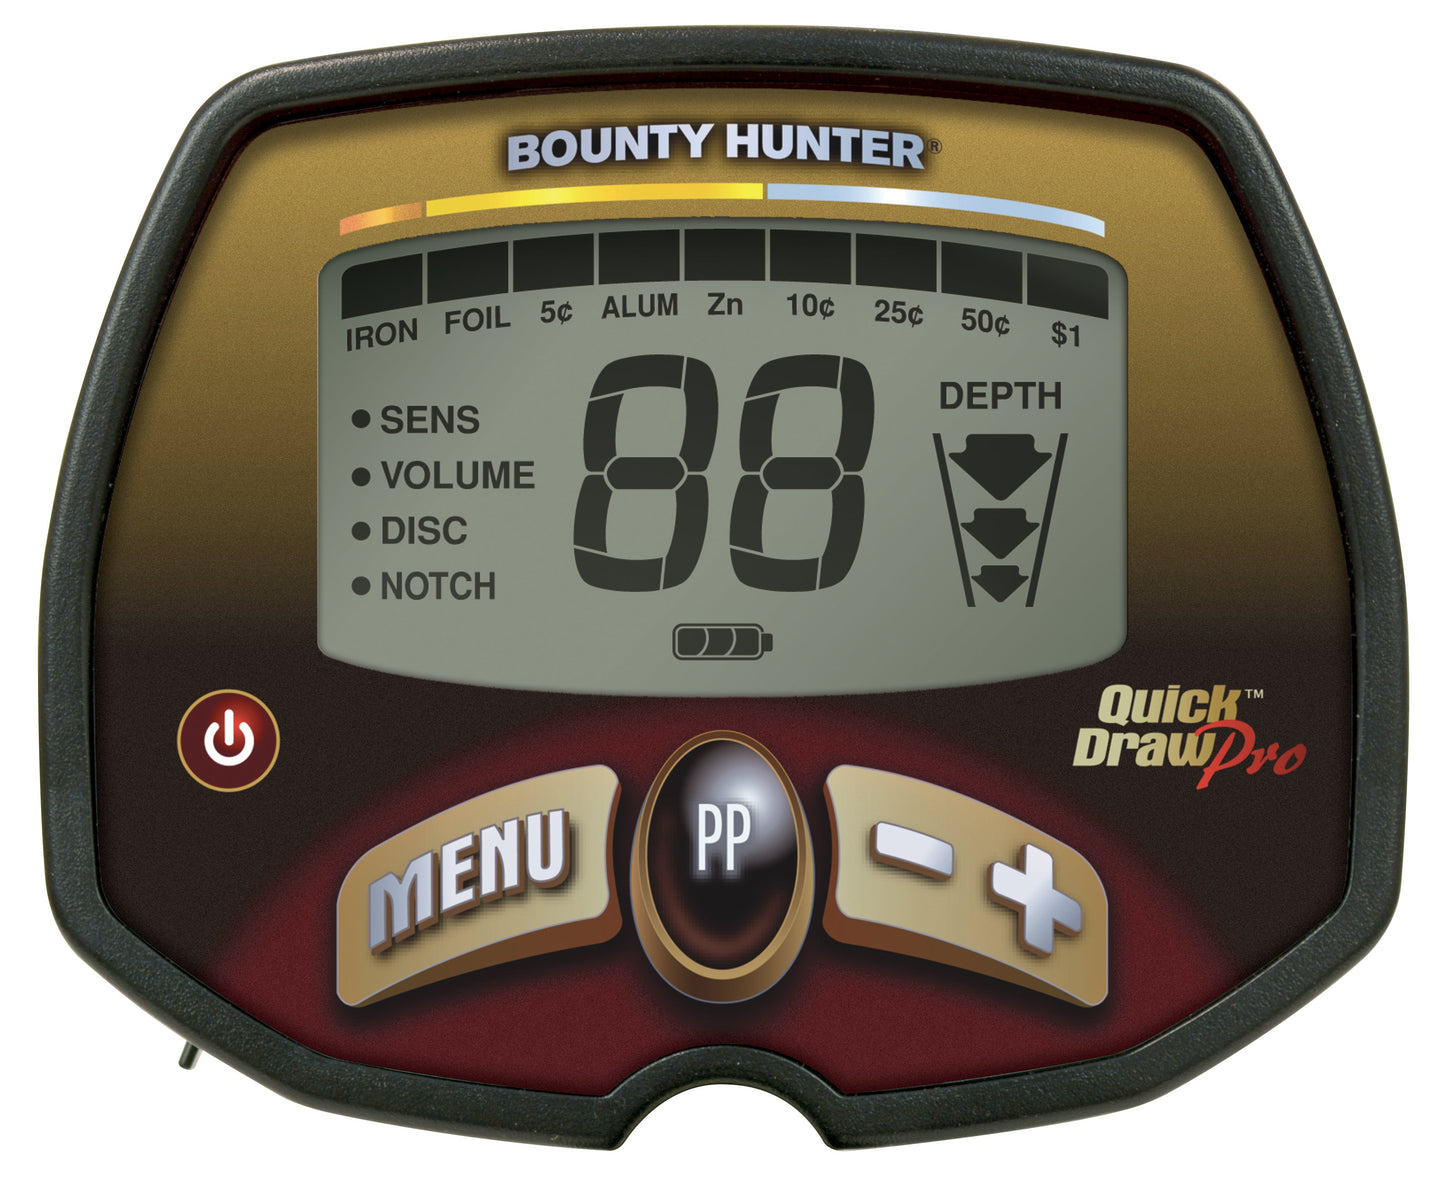 Bounty Hunter Quickdraw Pro Metal Detector